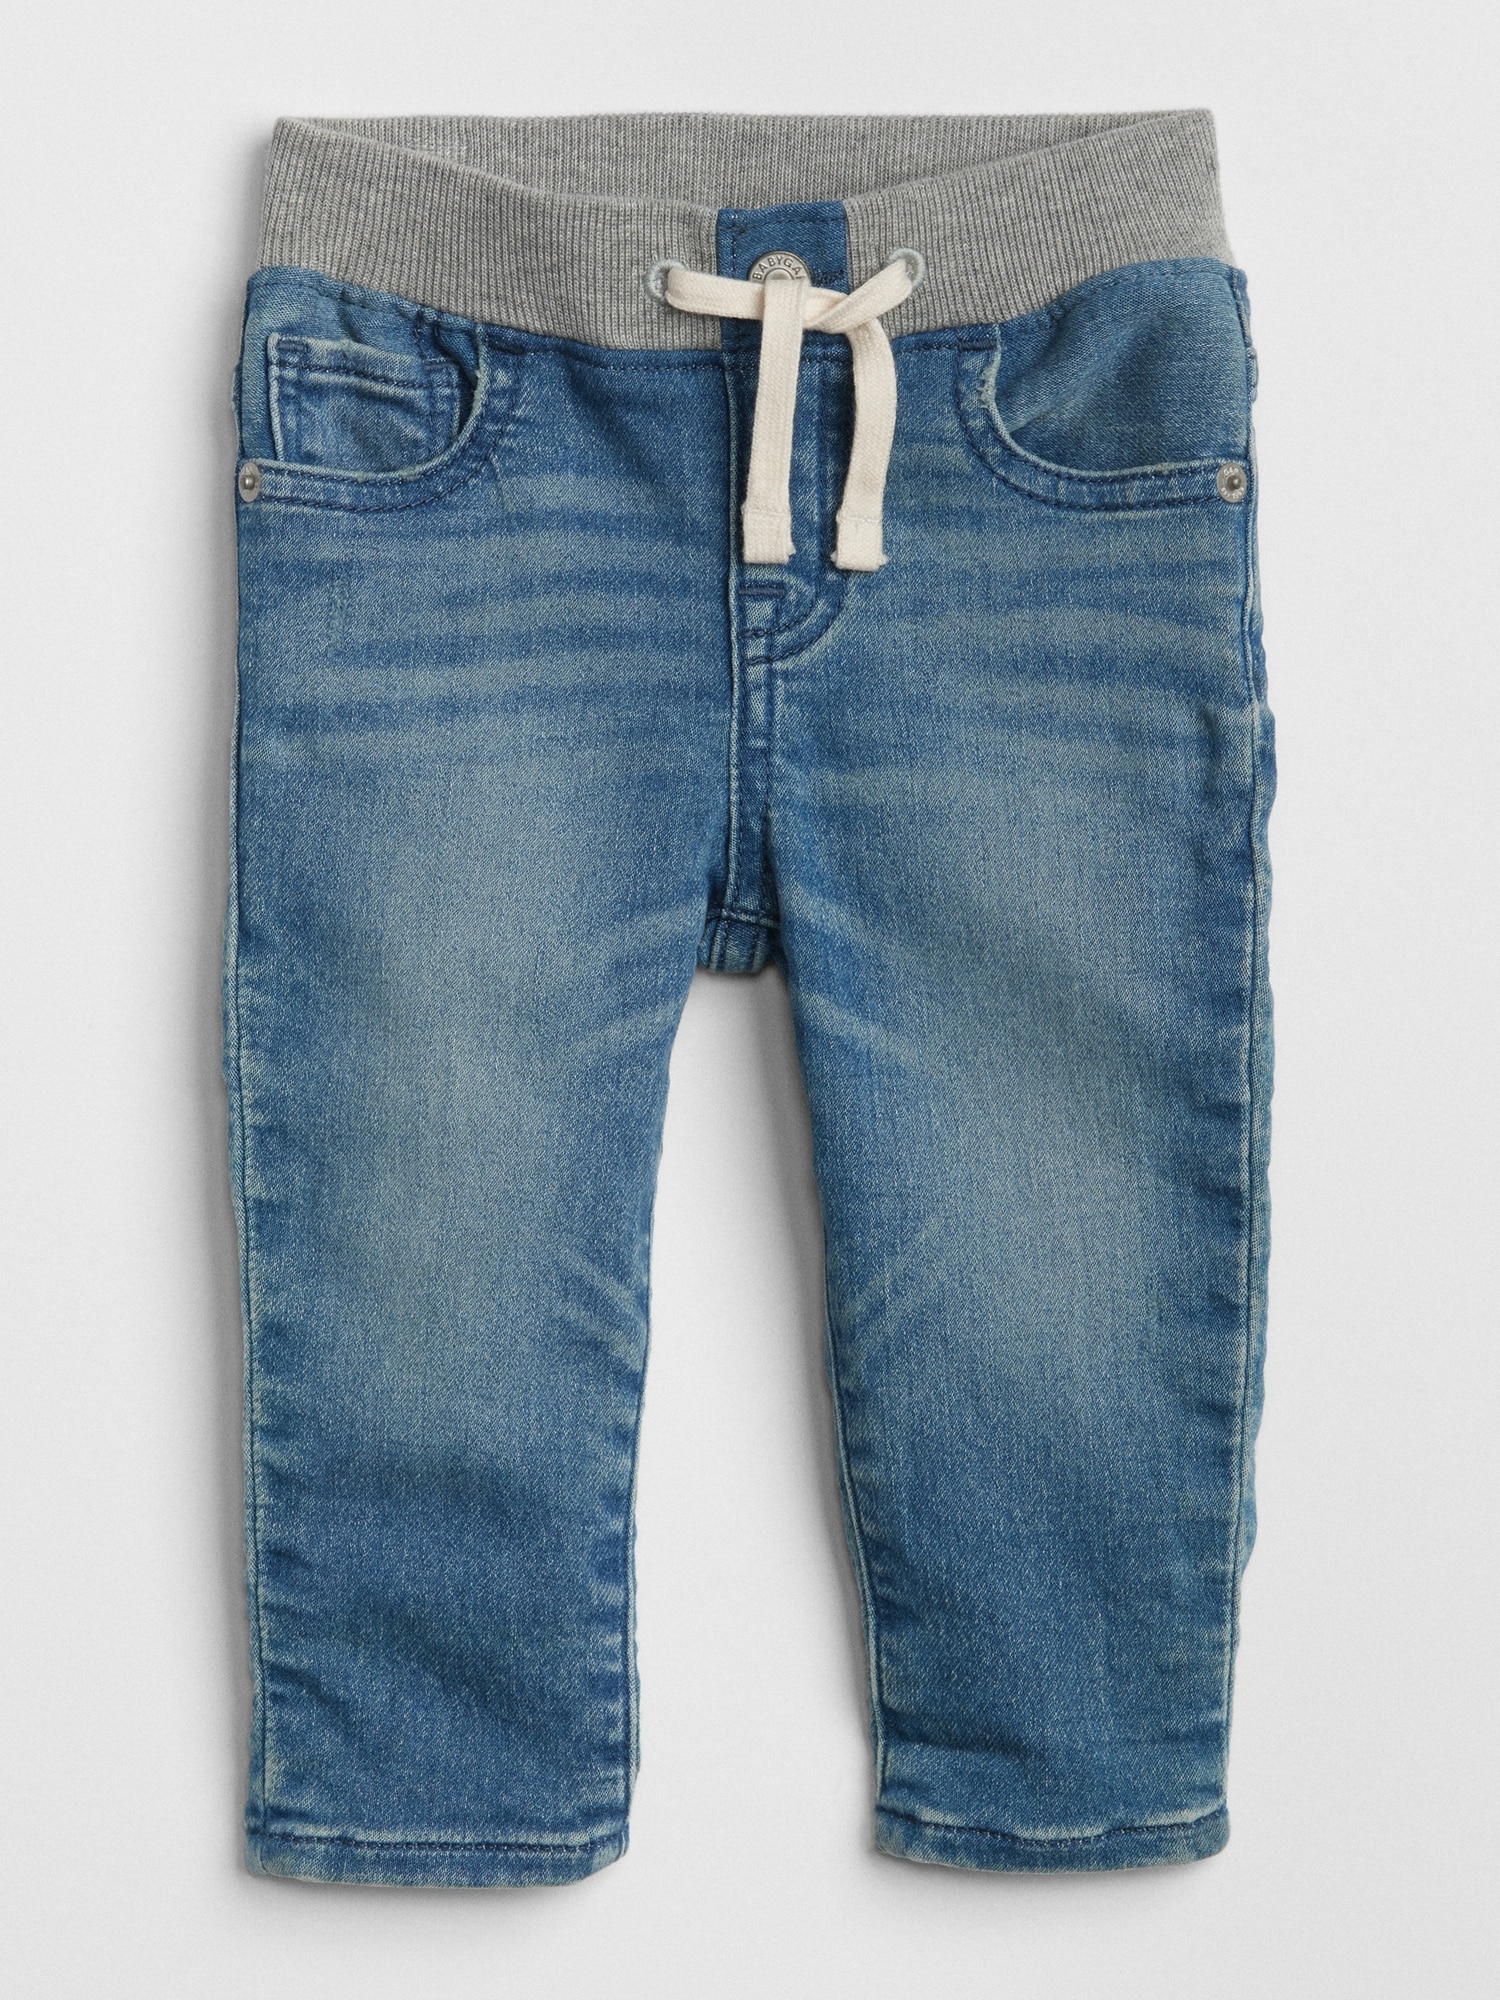 high waist jeans price